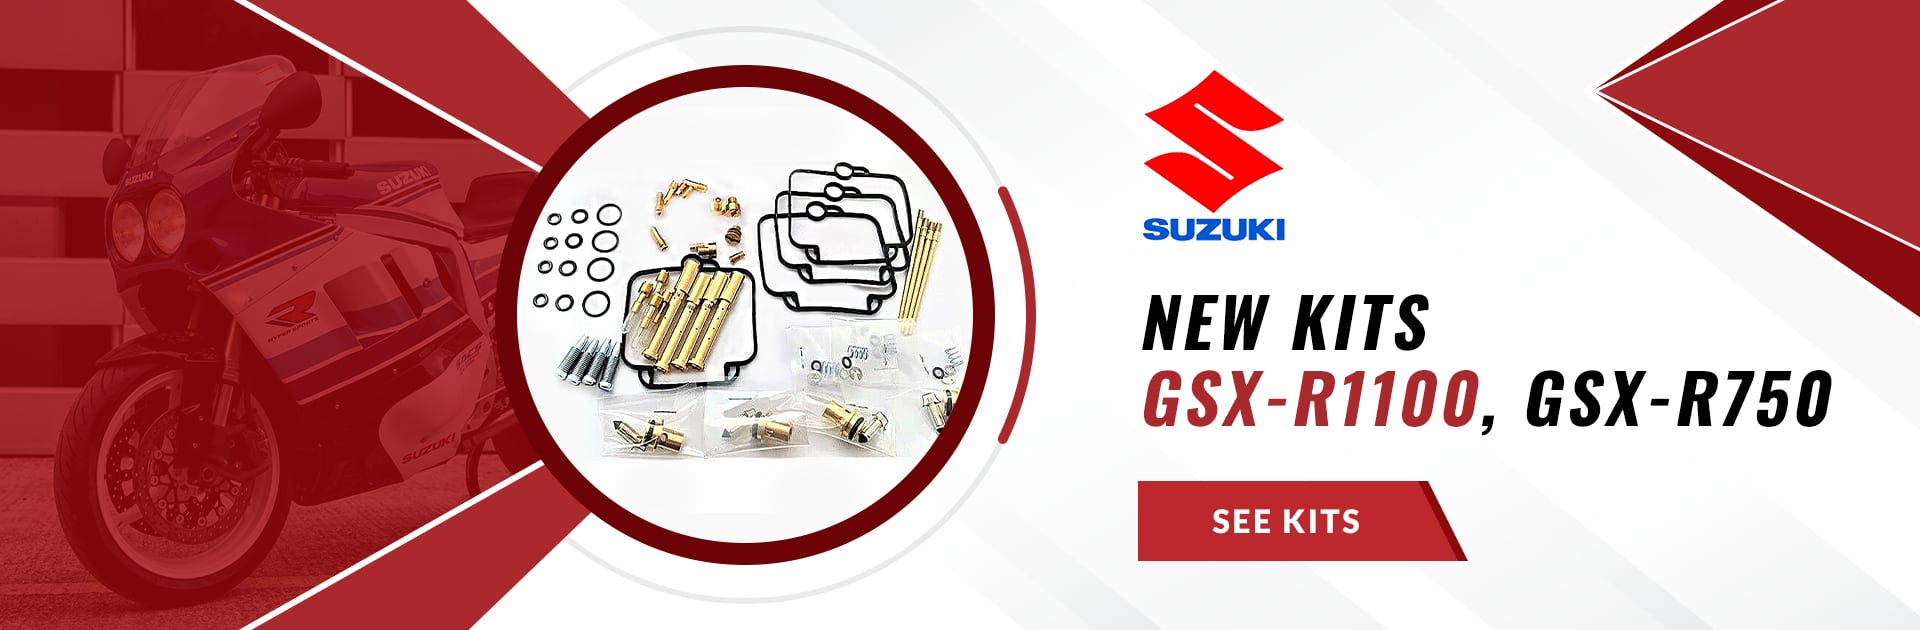 Nuevos Kits Suzuki